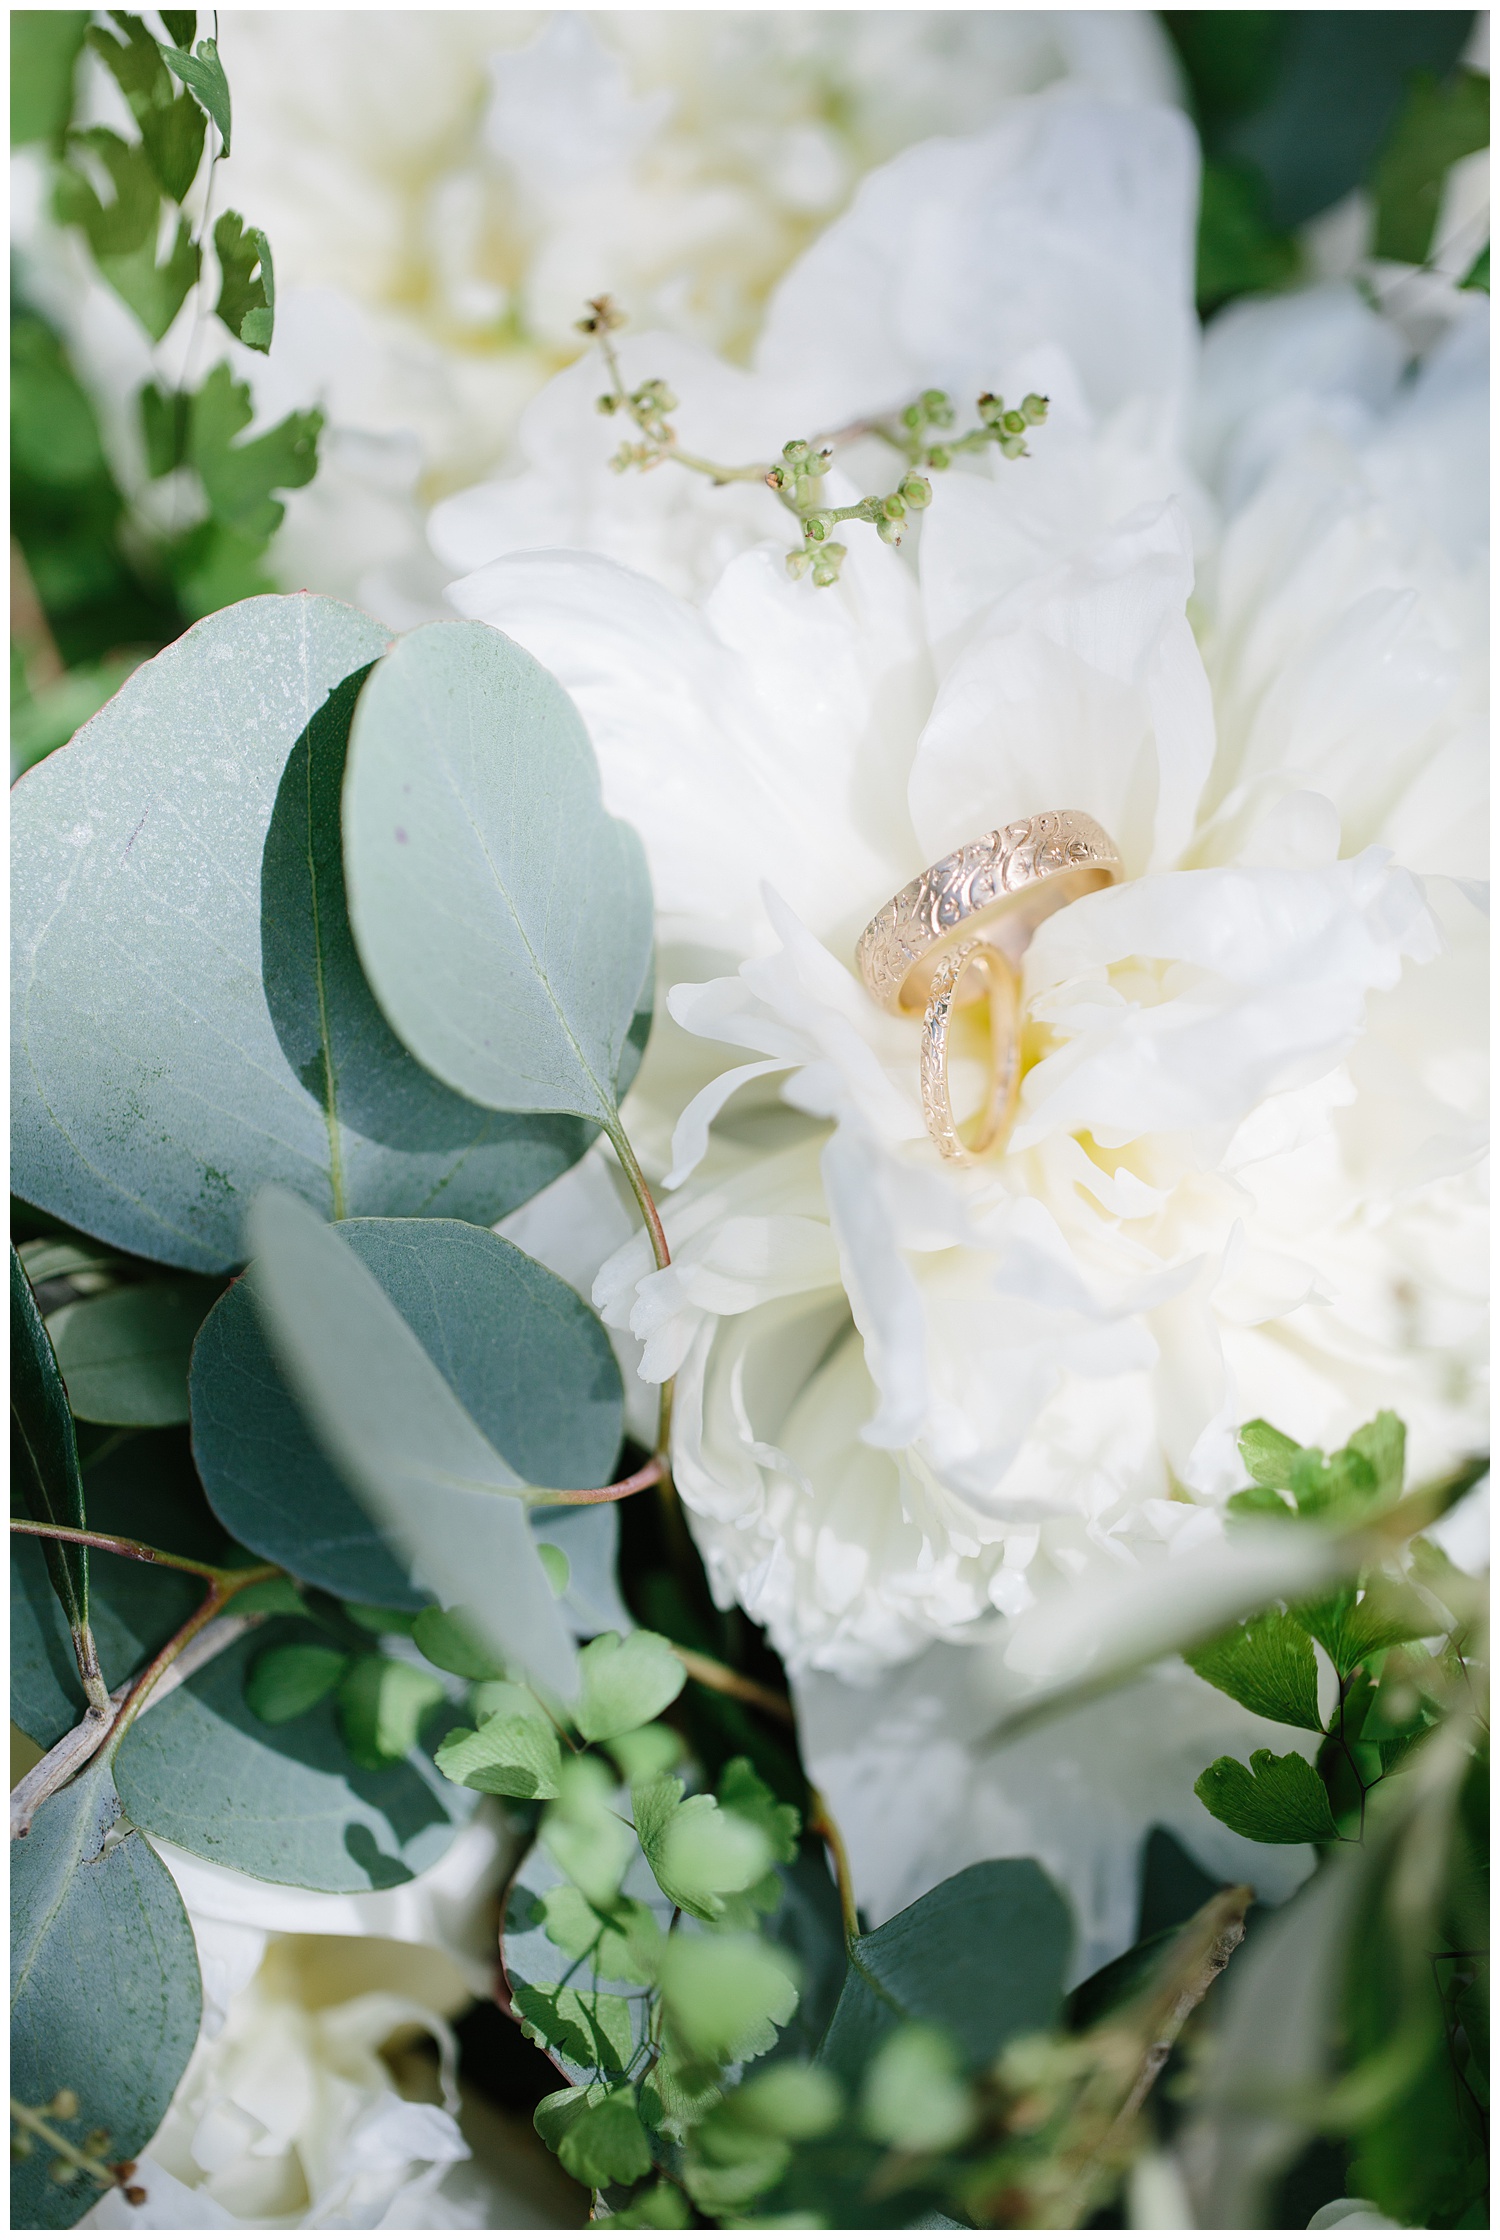 Tyler + Brynn + Botanical Gardens + Roger Williams + Rhode Island + Wedding_0001.jpg